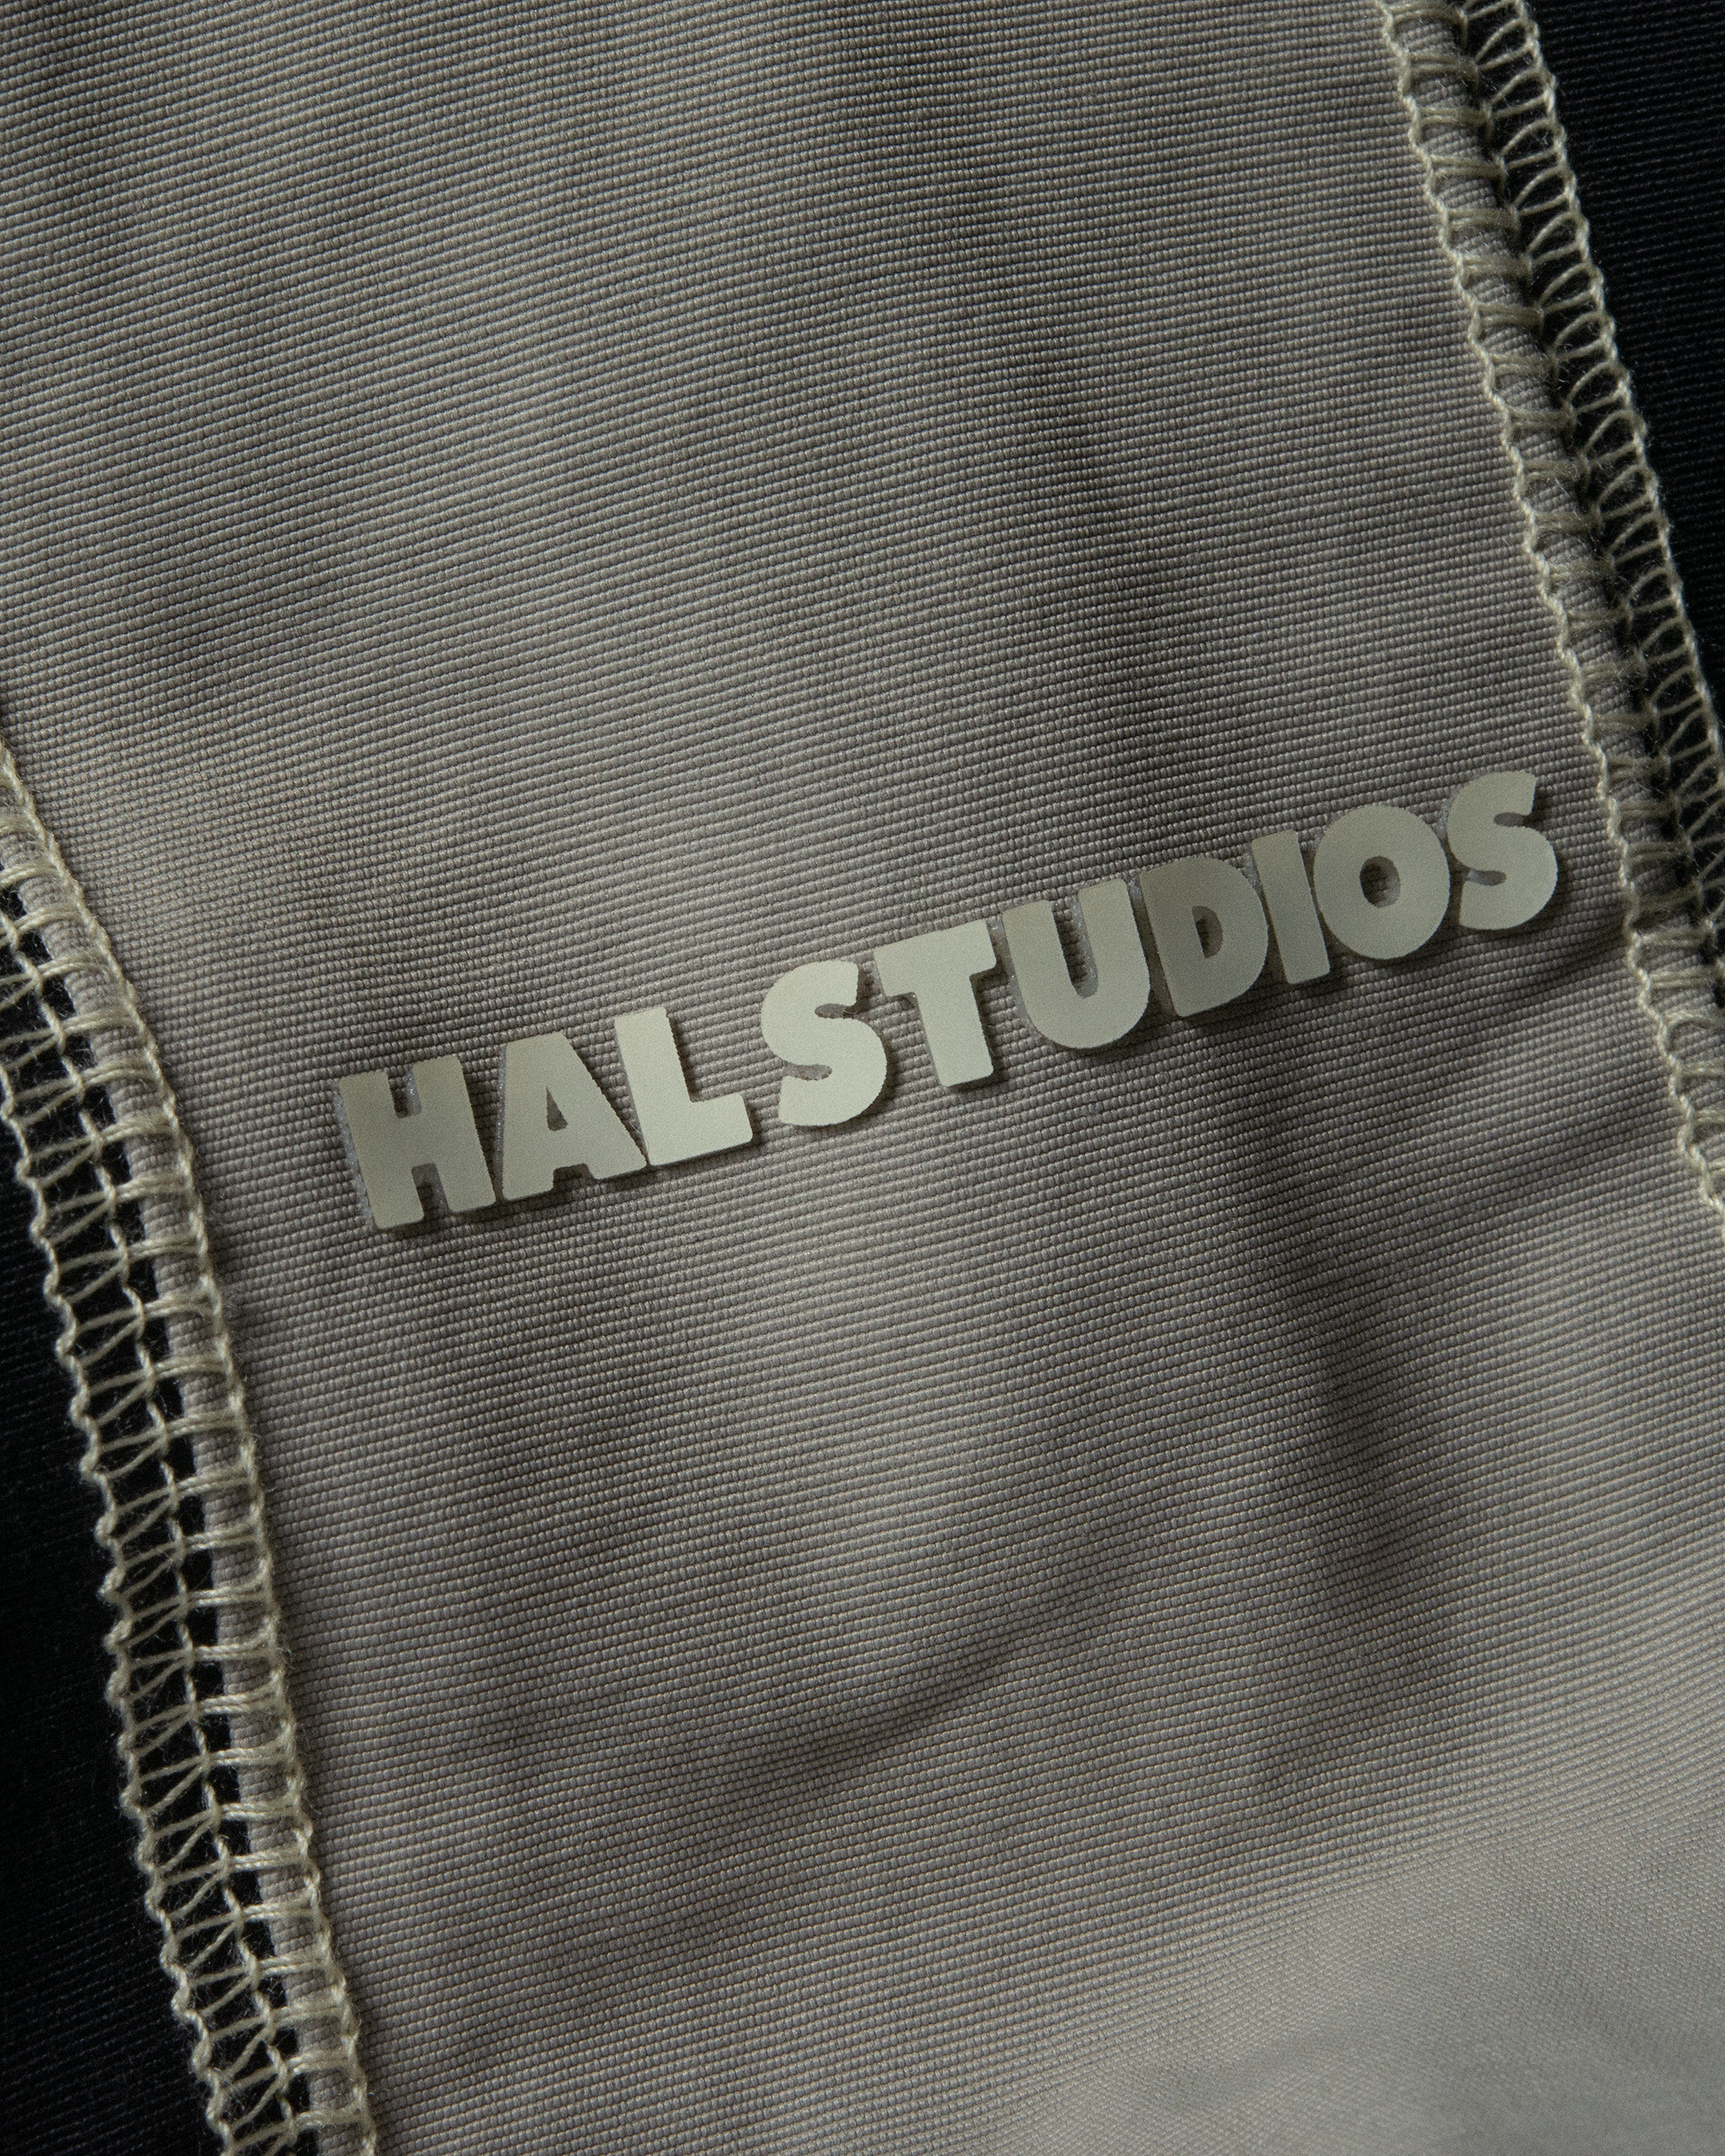 HAL STUDIOS